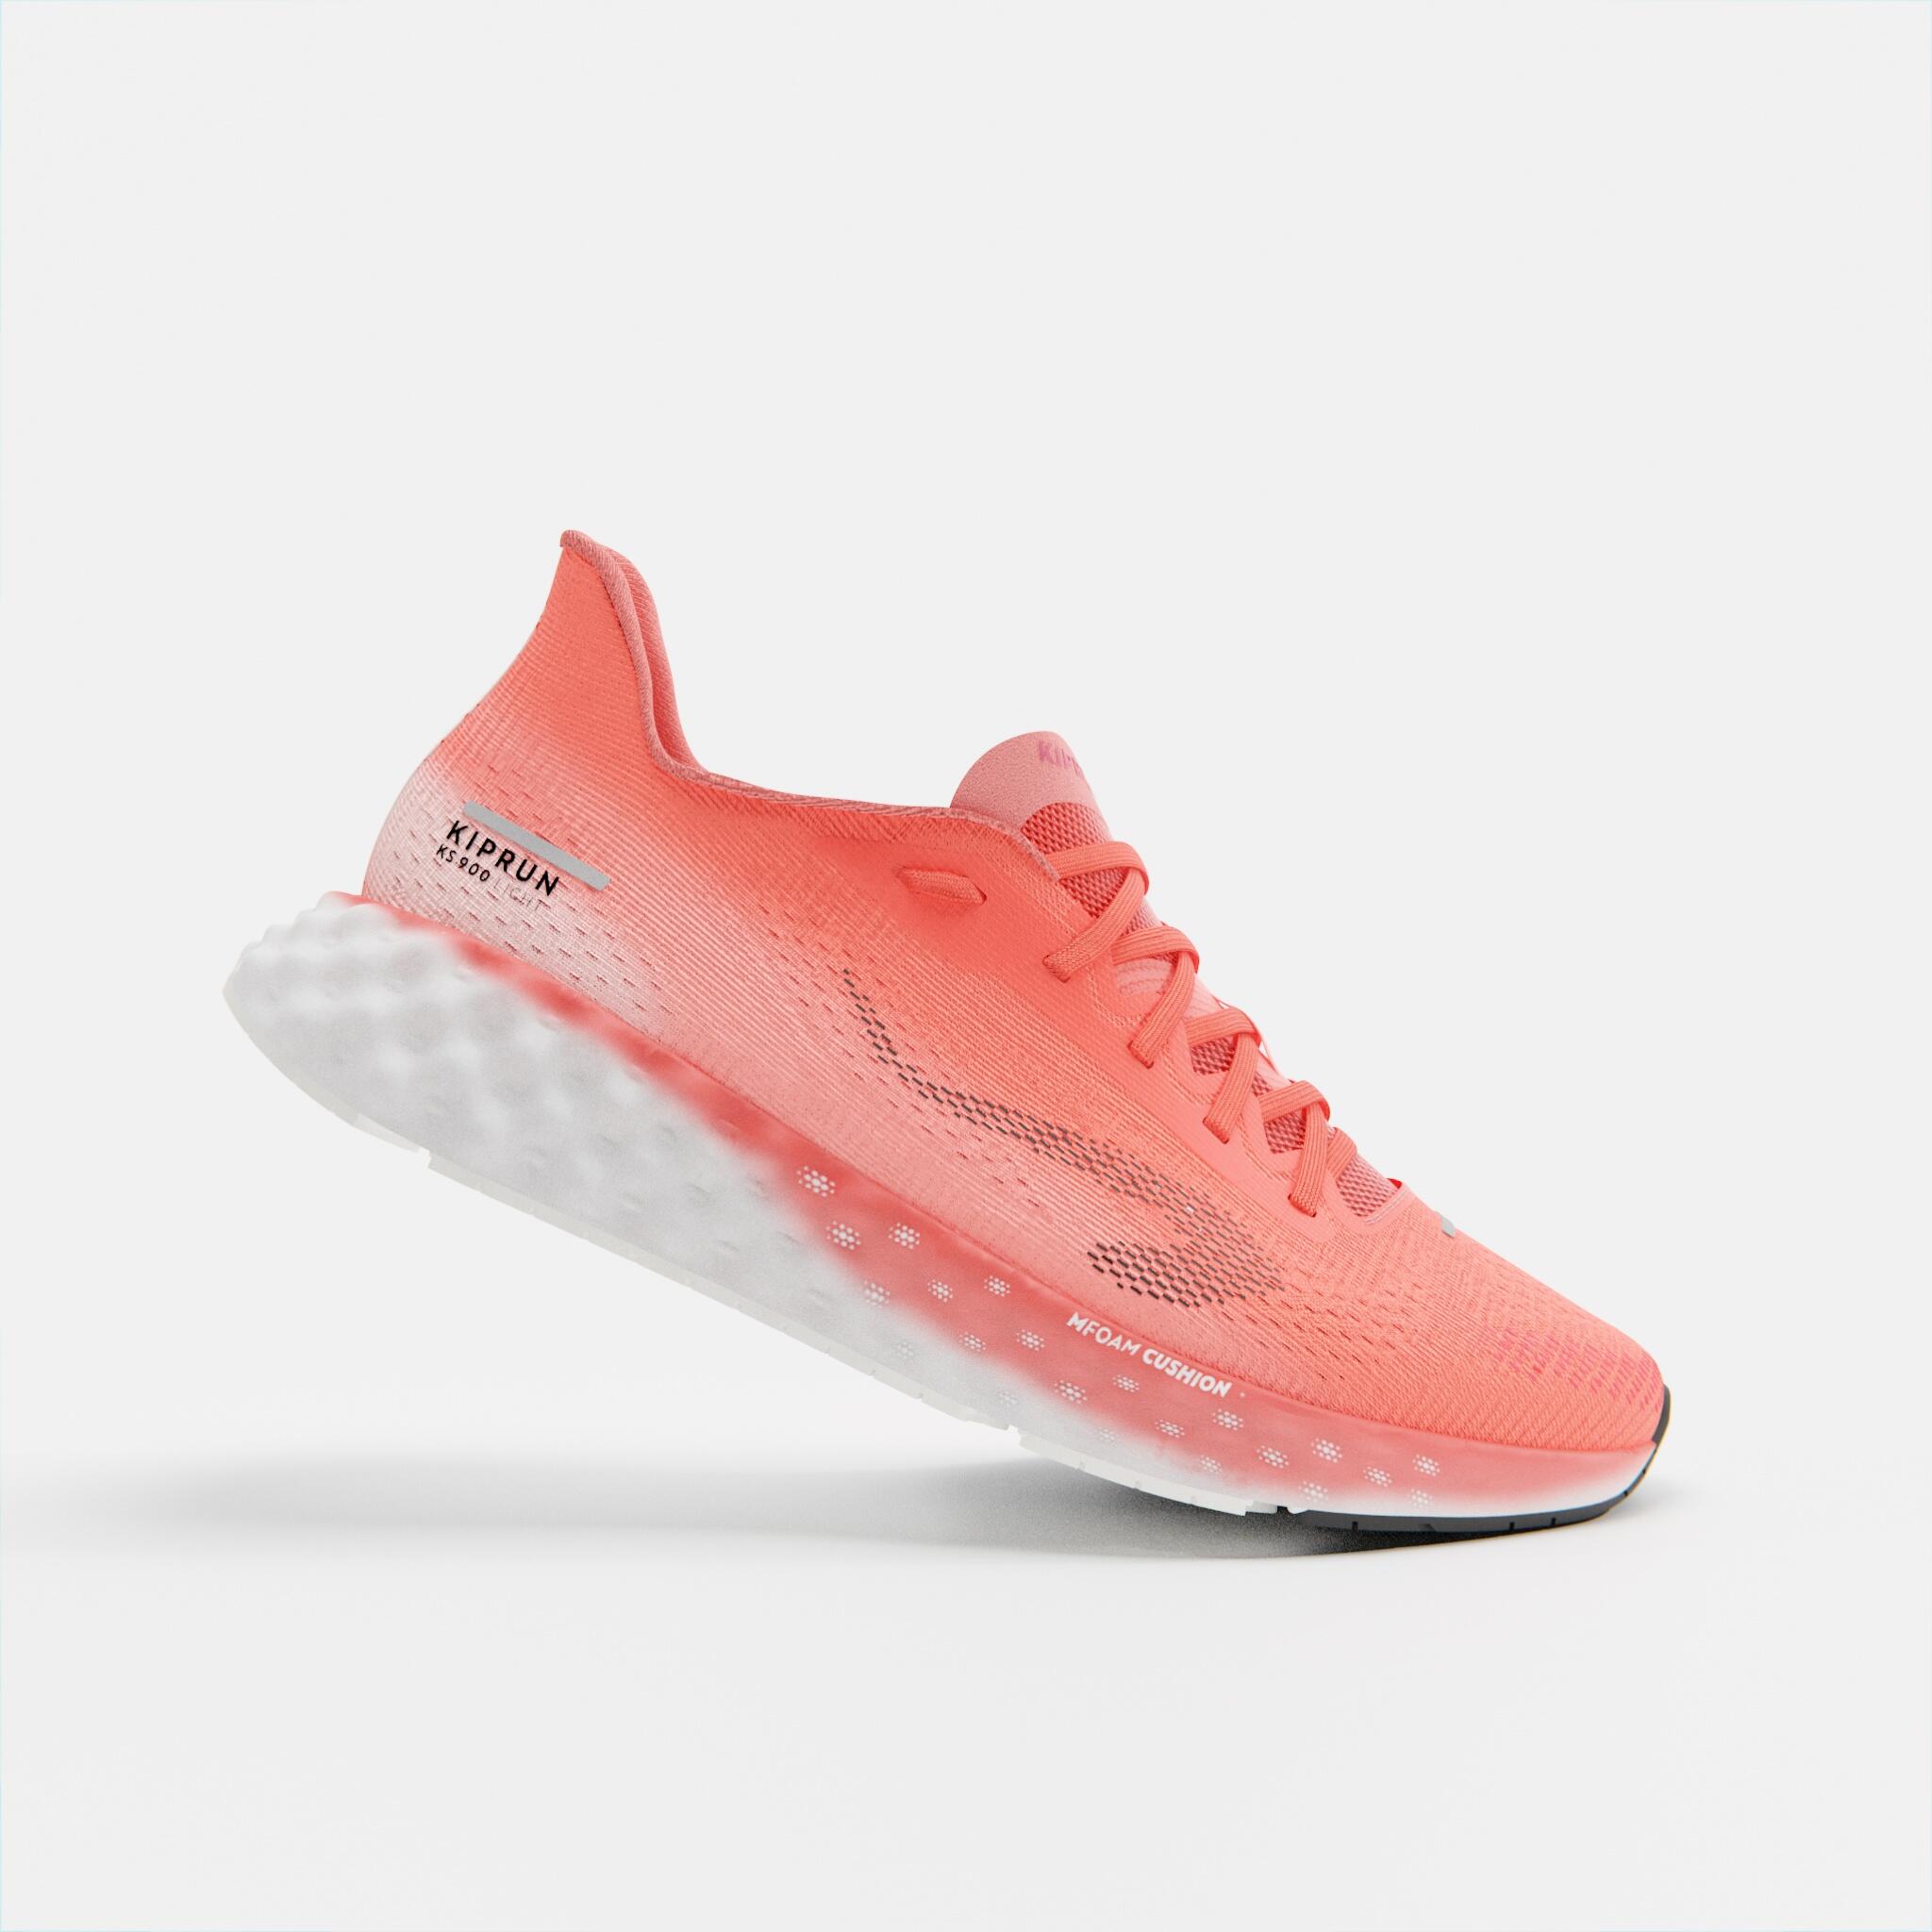  KIPRUN KS900 Women's Running Shoes - Light coral 1/12